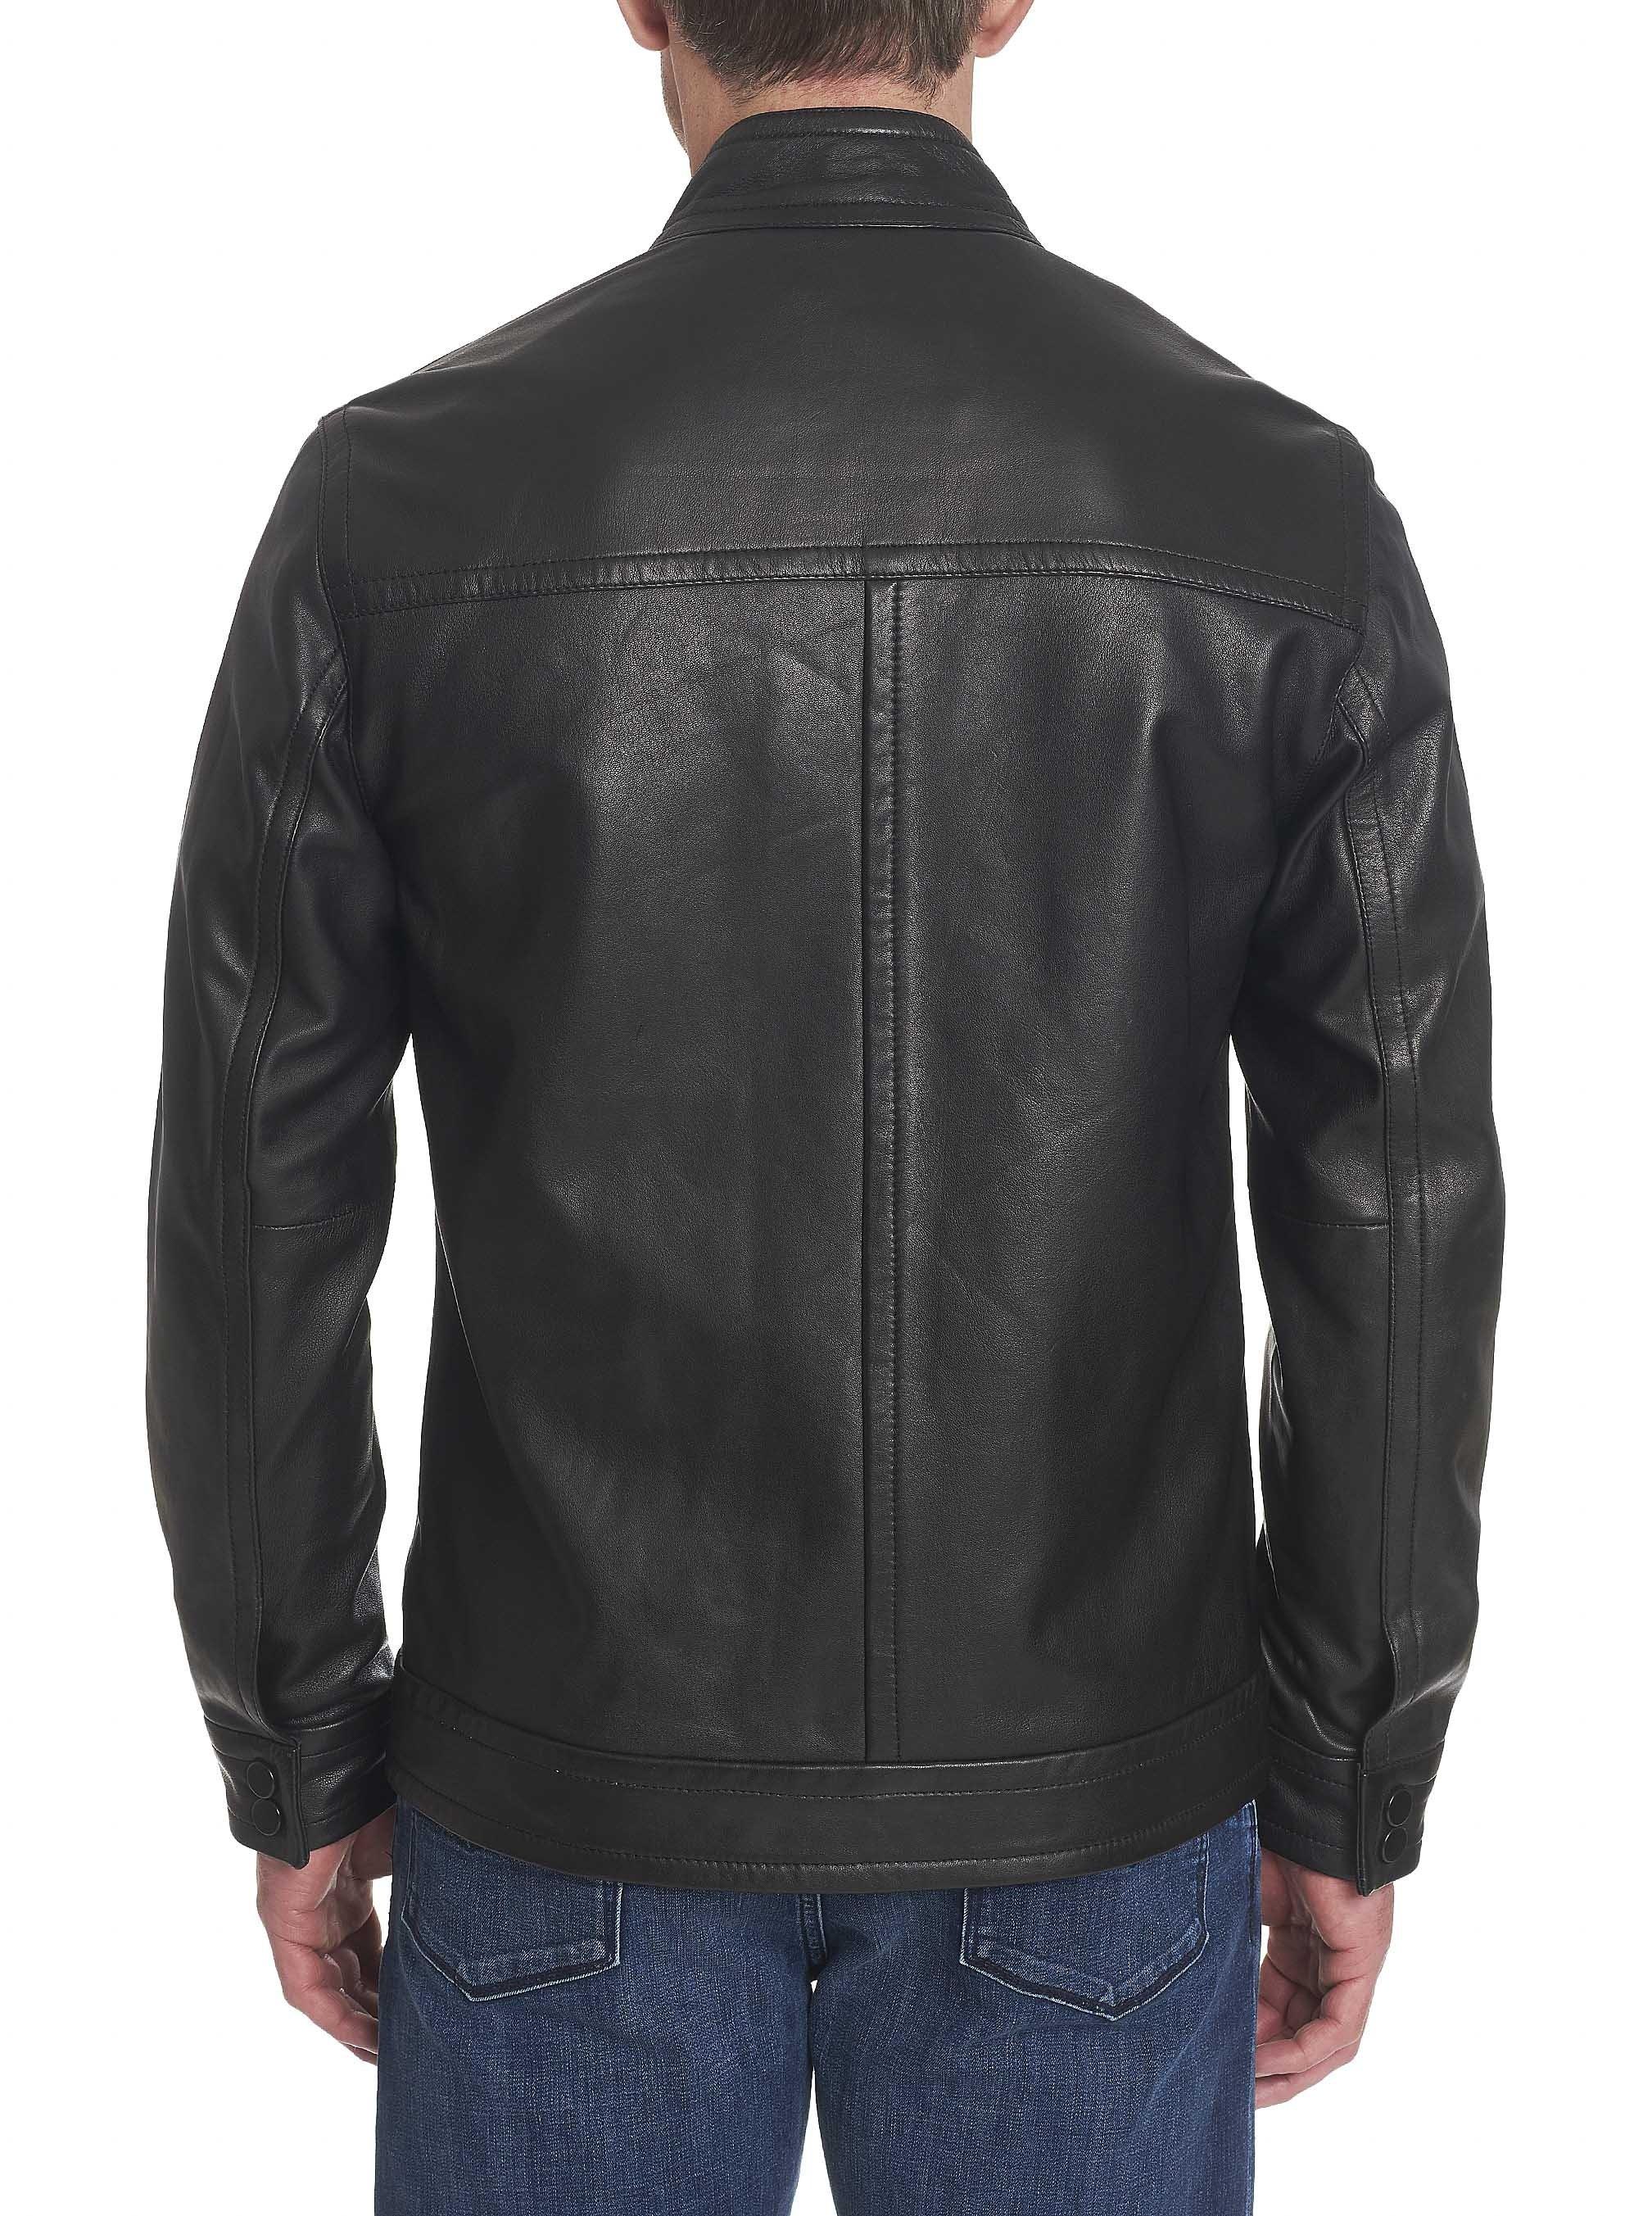 Robert Graham Leather Napoleon 2 Jacket in Black for Men - Lyst